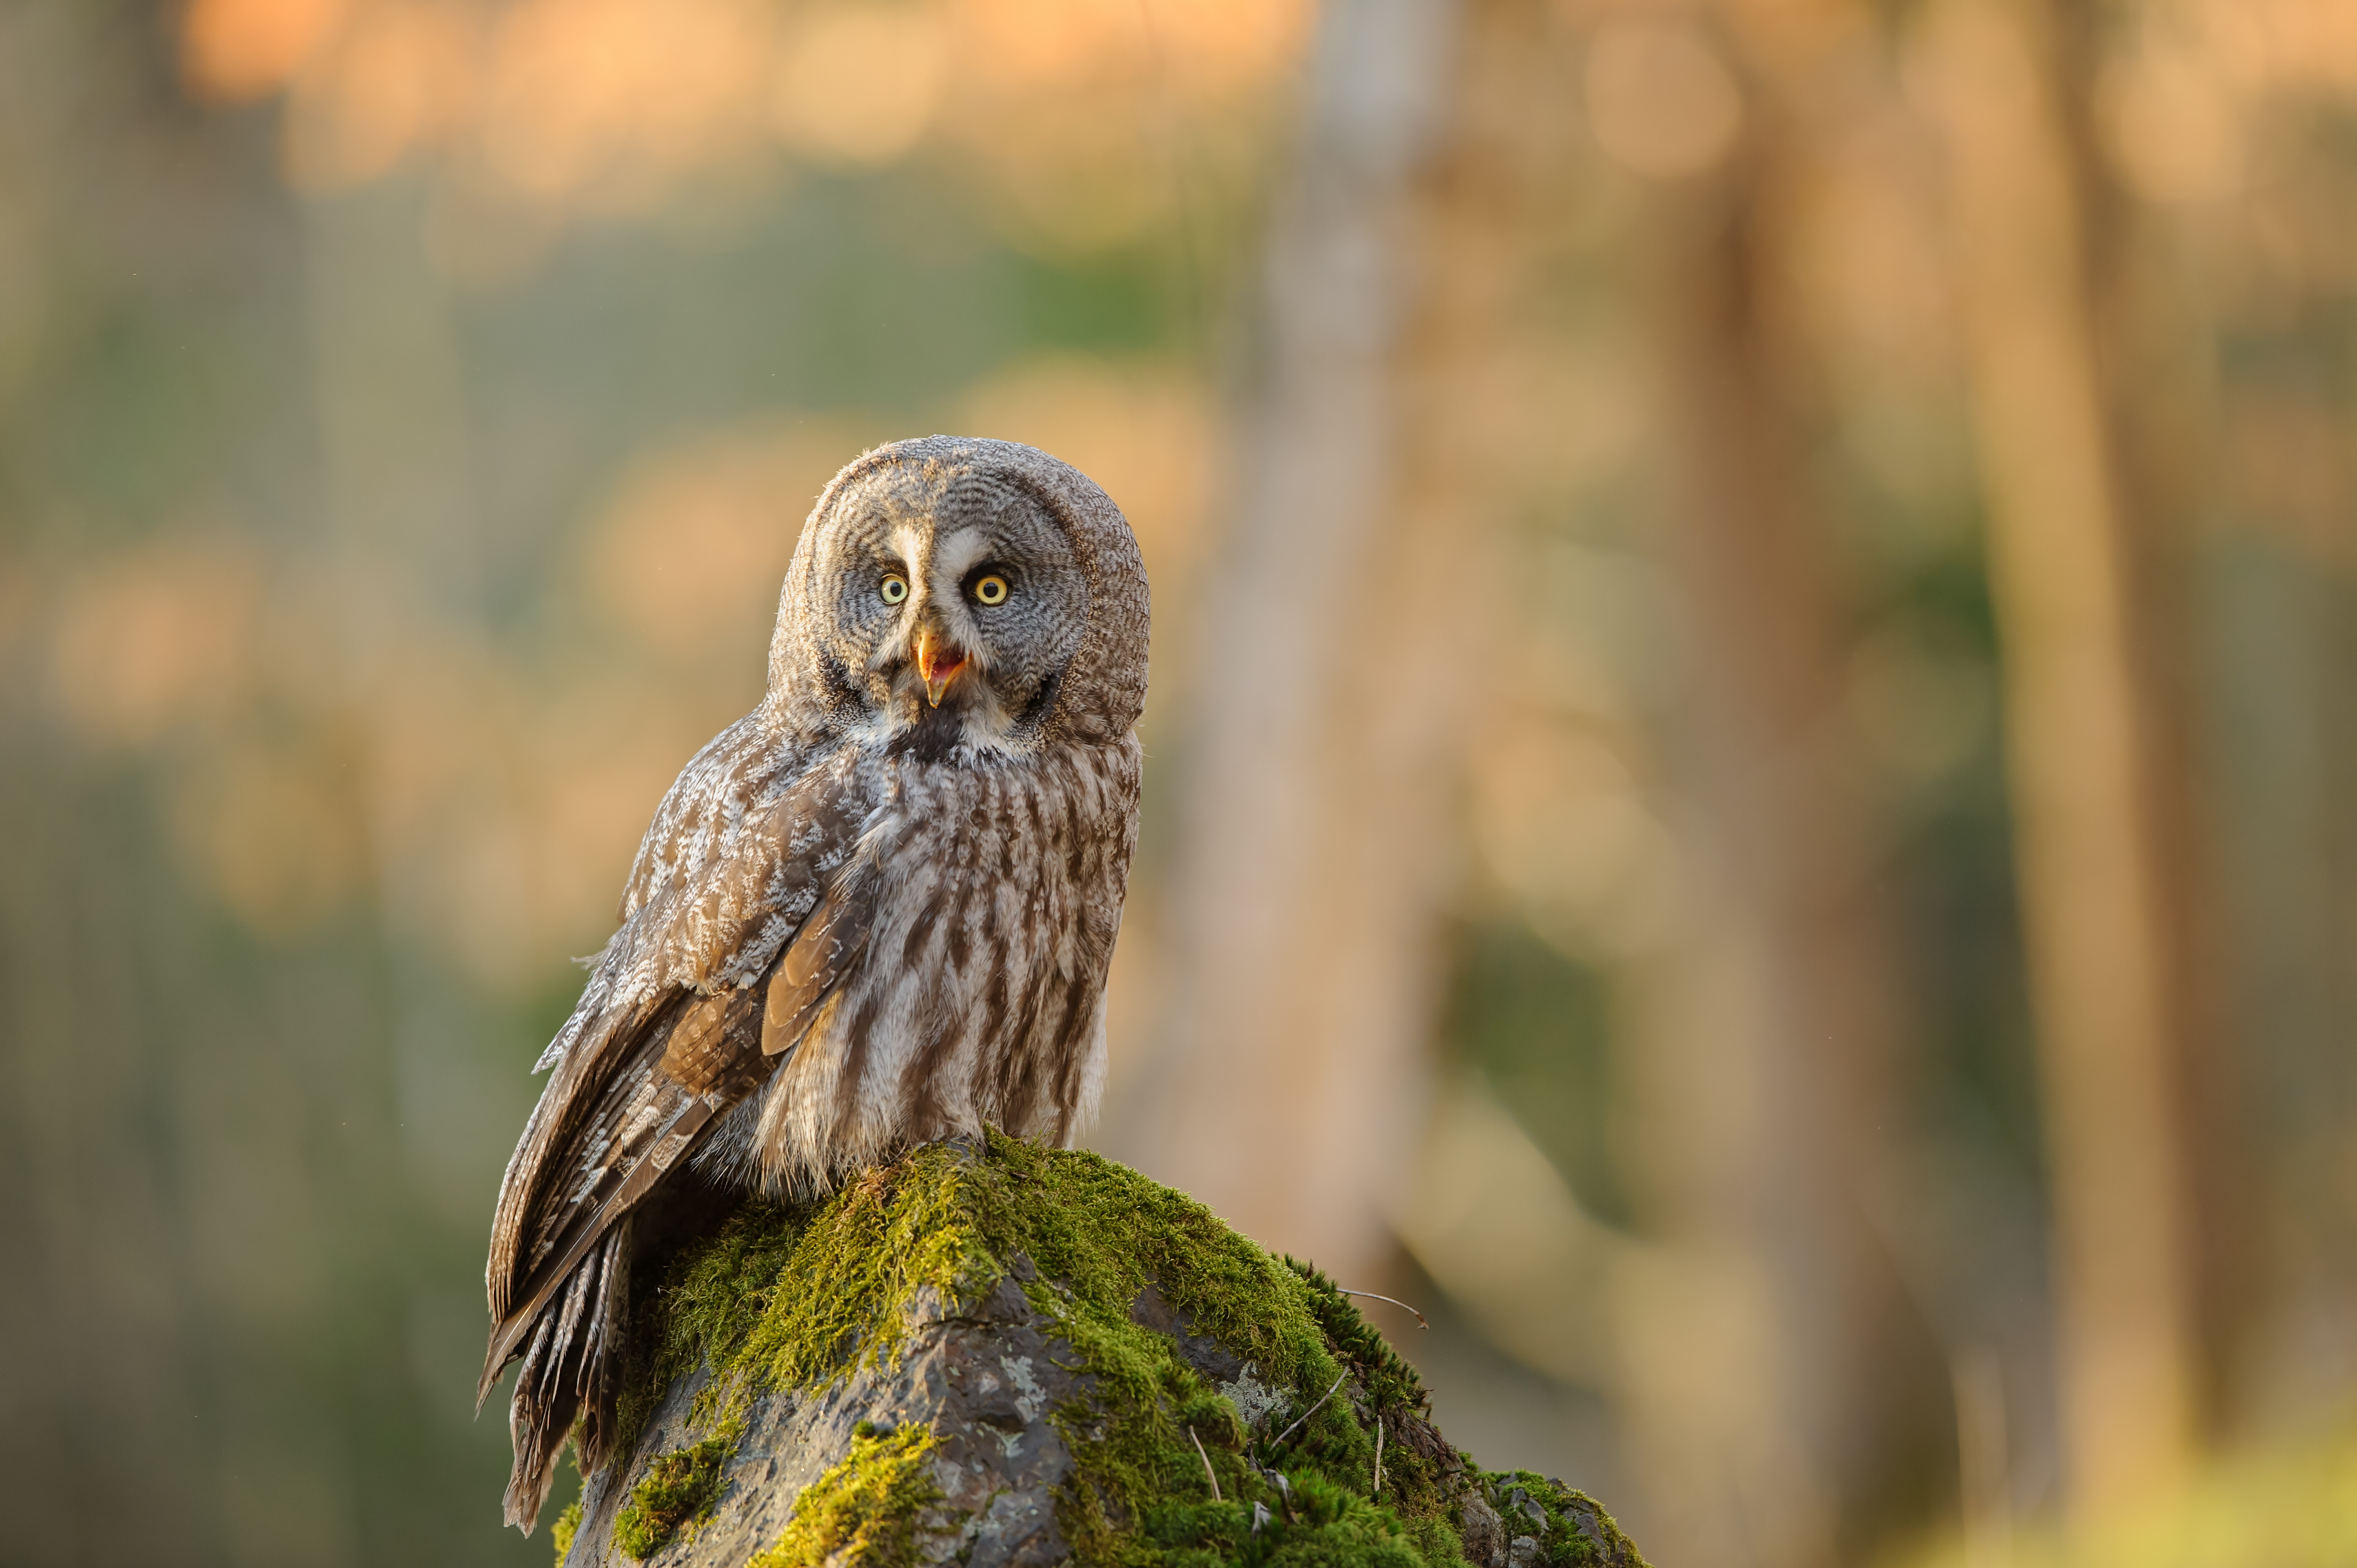 Great grey owl sitting on mossy stone